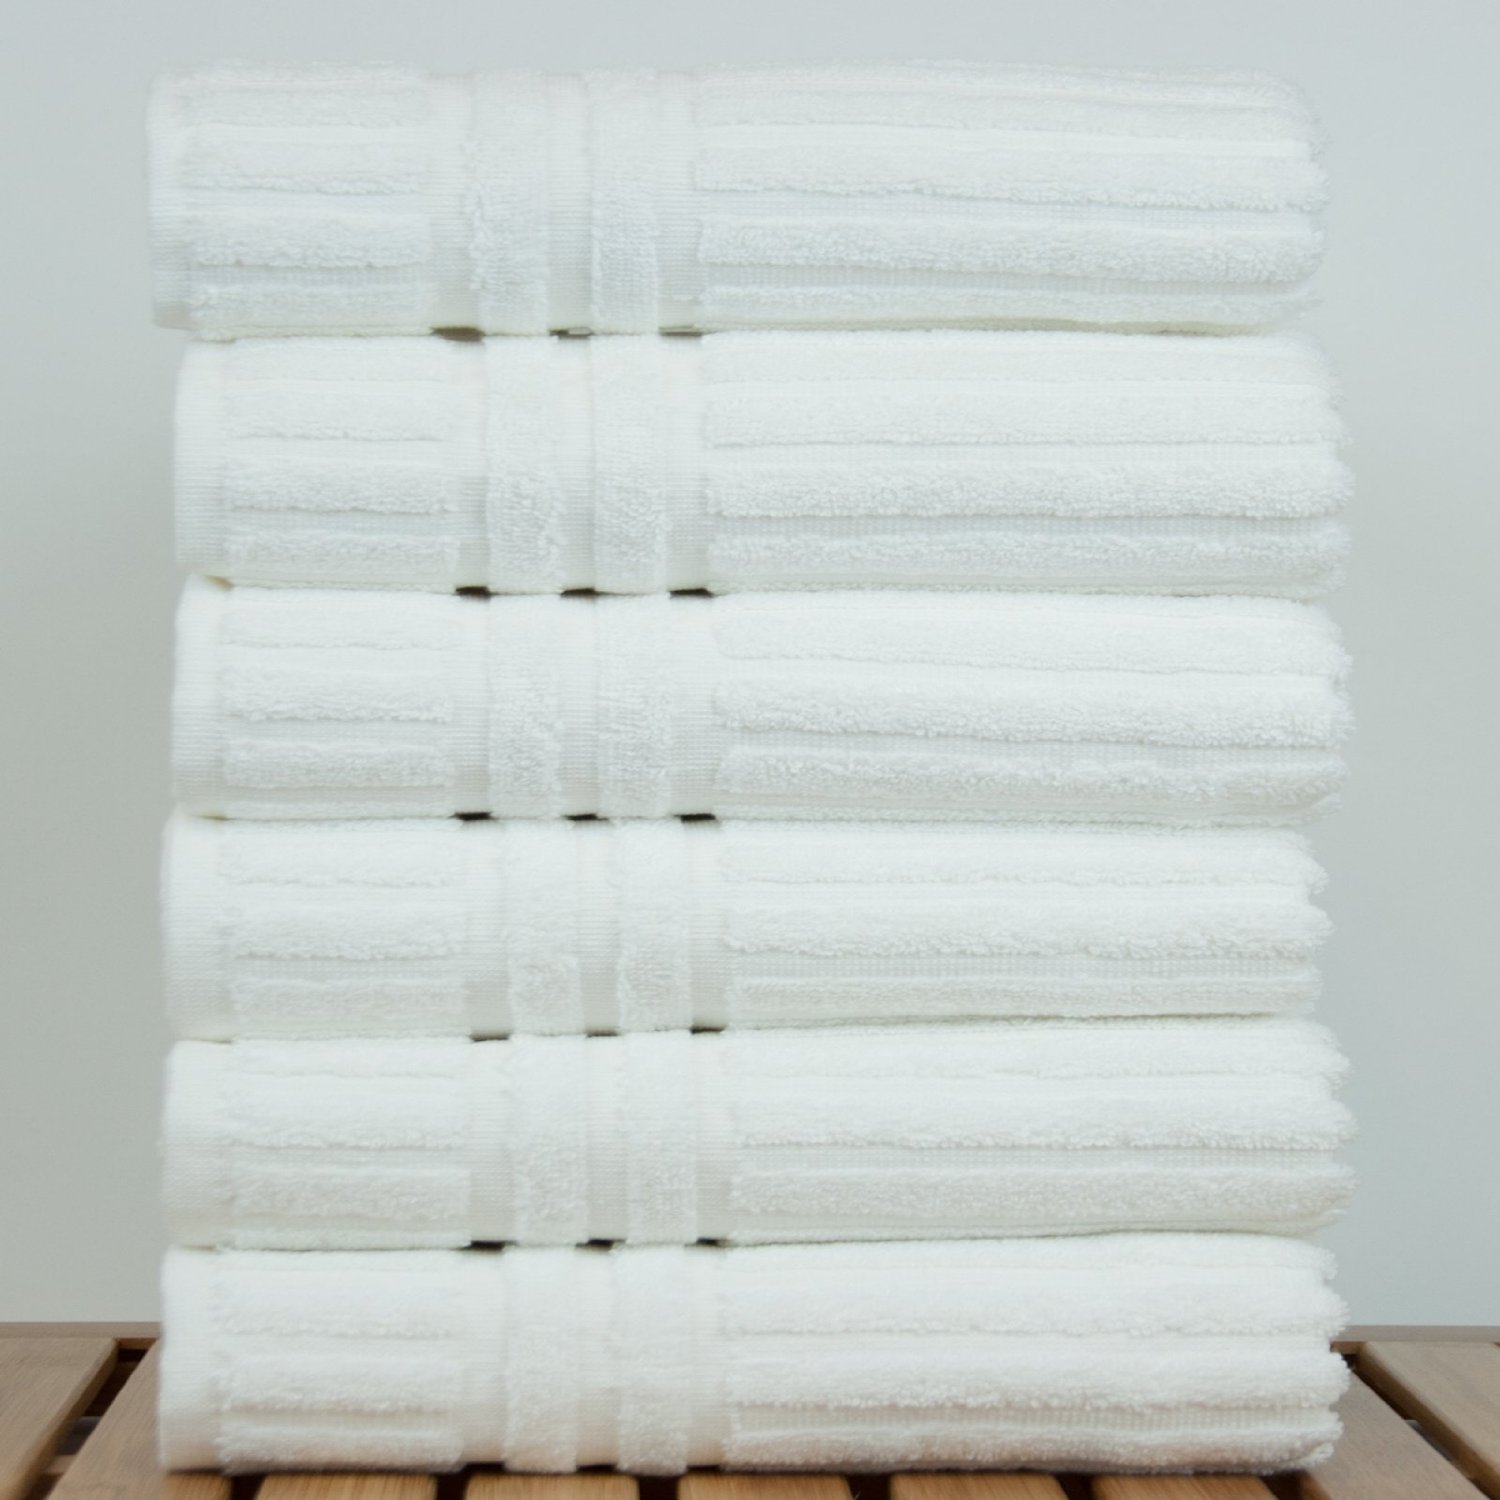 16" x 32" 5 lbs/doz - %100 Turkish Cotton White Hand Towel - Striped Border-Robemart.com